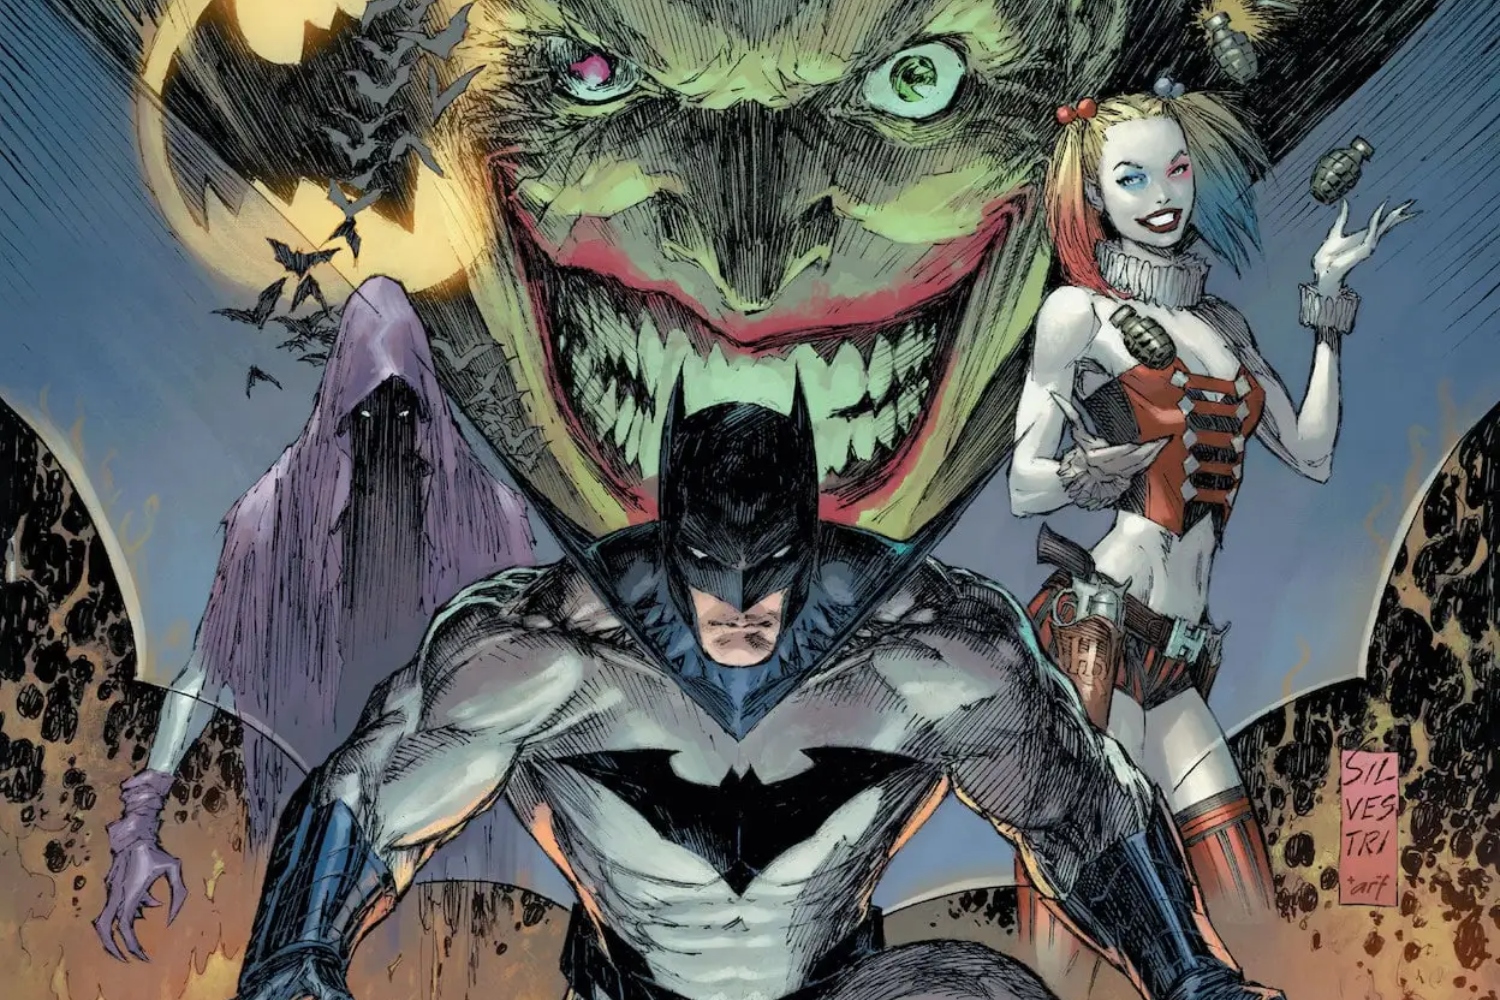 Marc Silvestri dissects the Batman-Joker team in 'Deadly Duo'